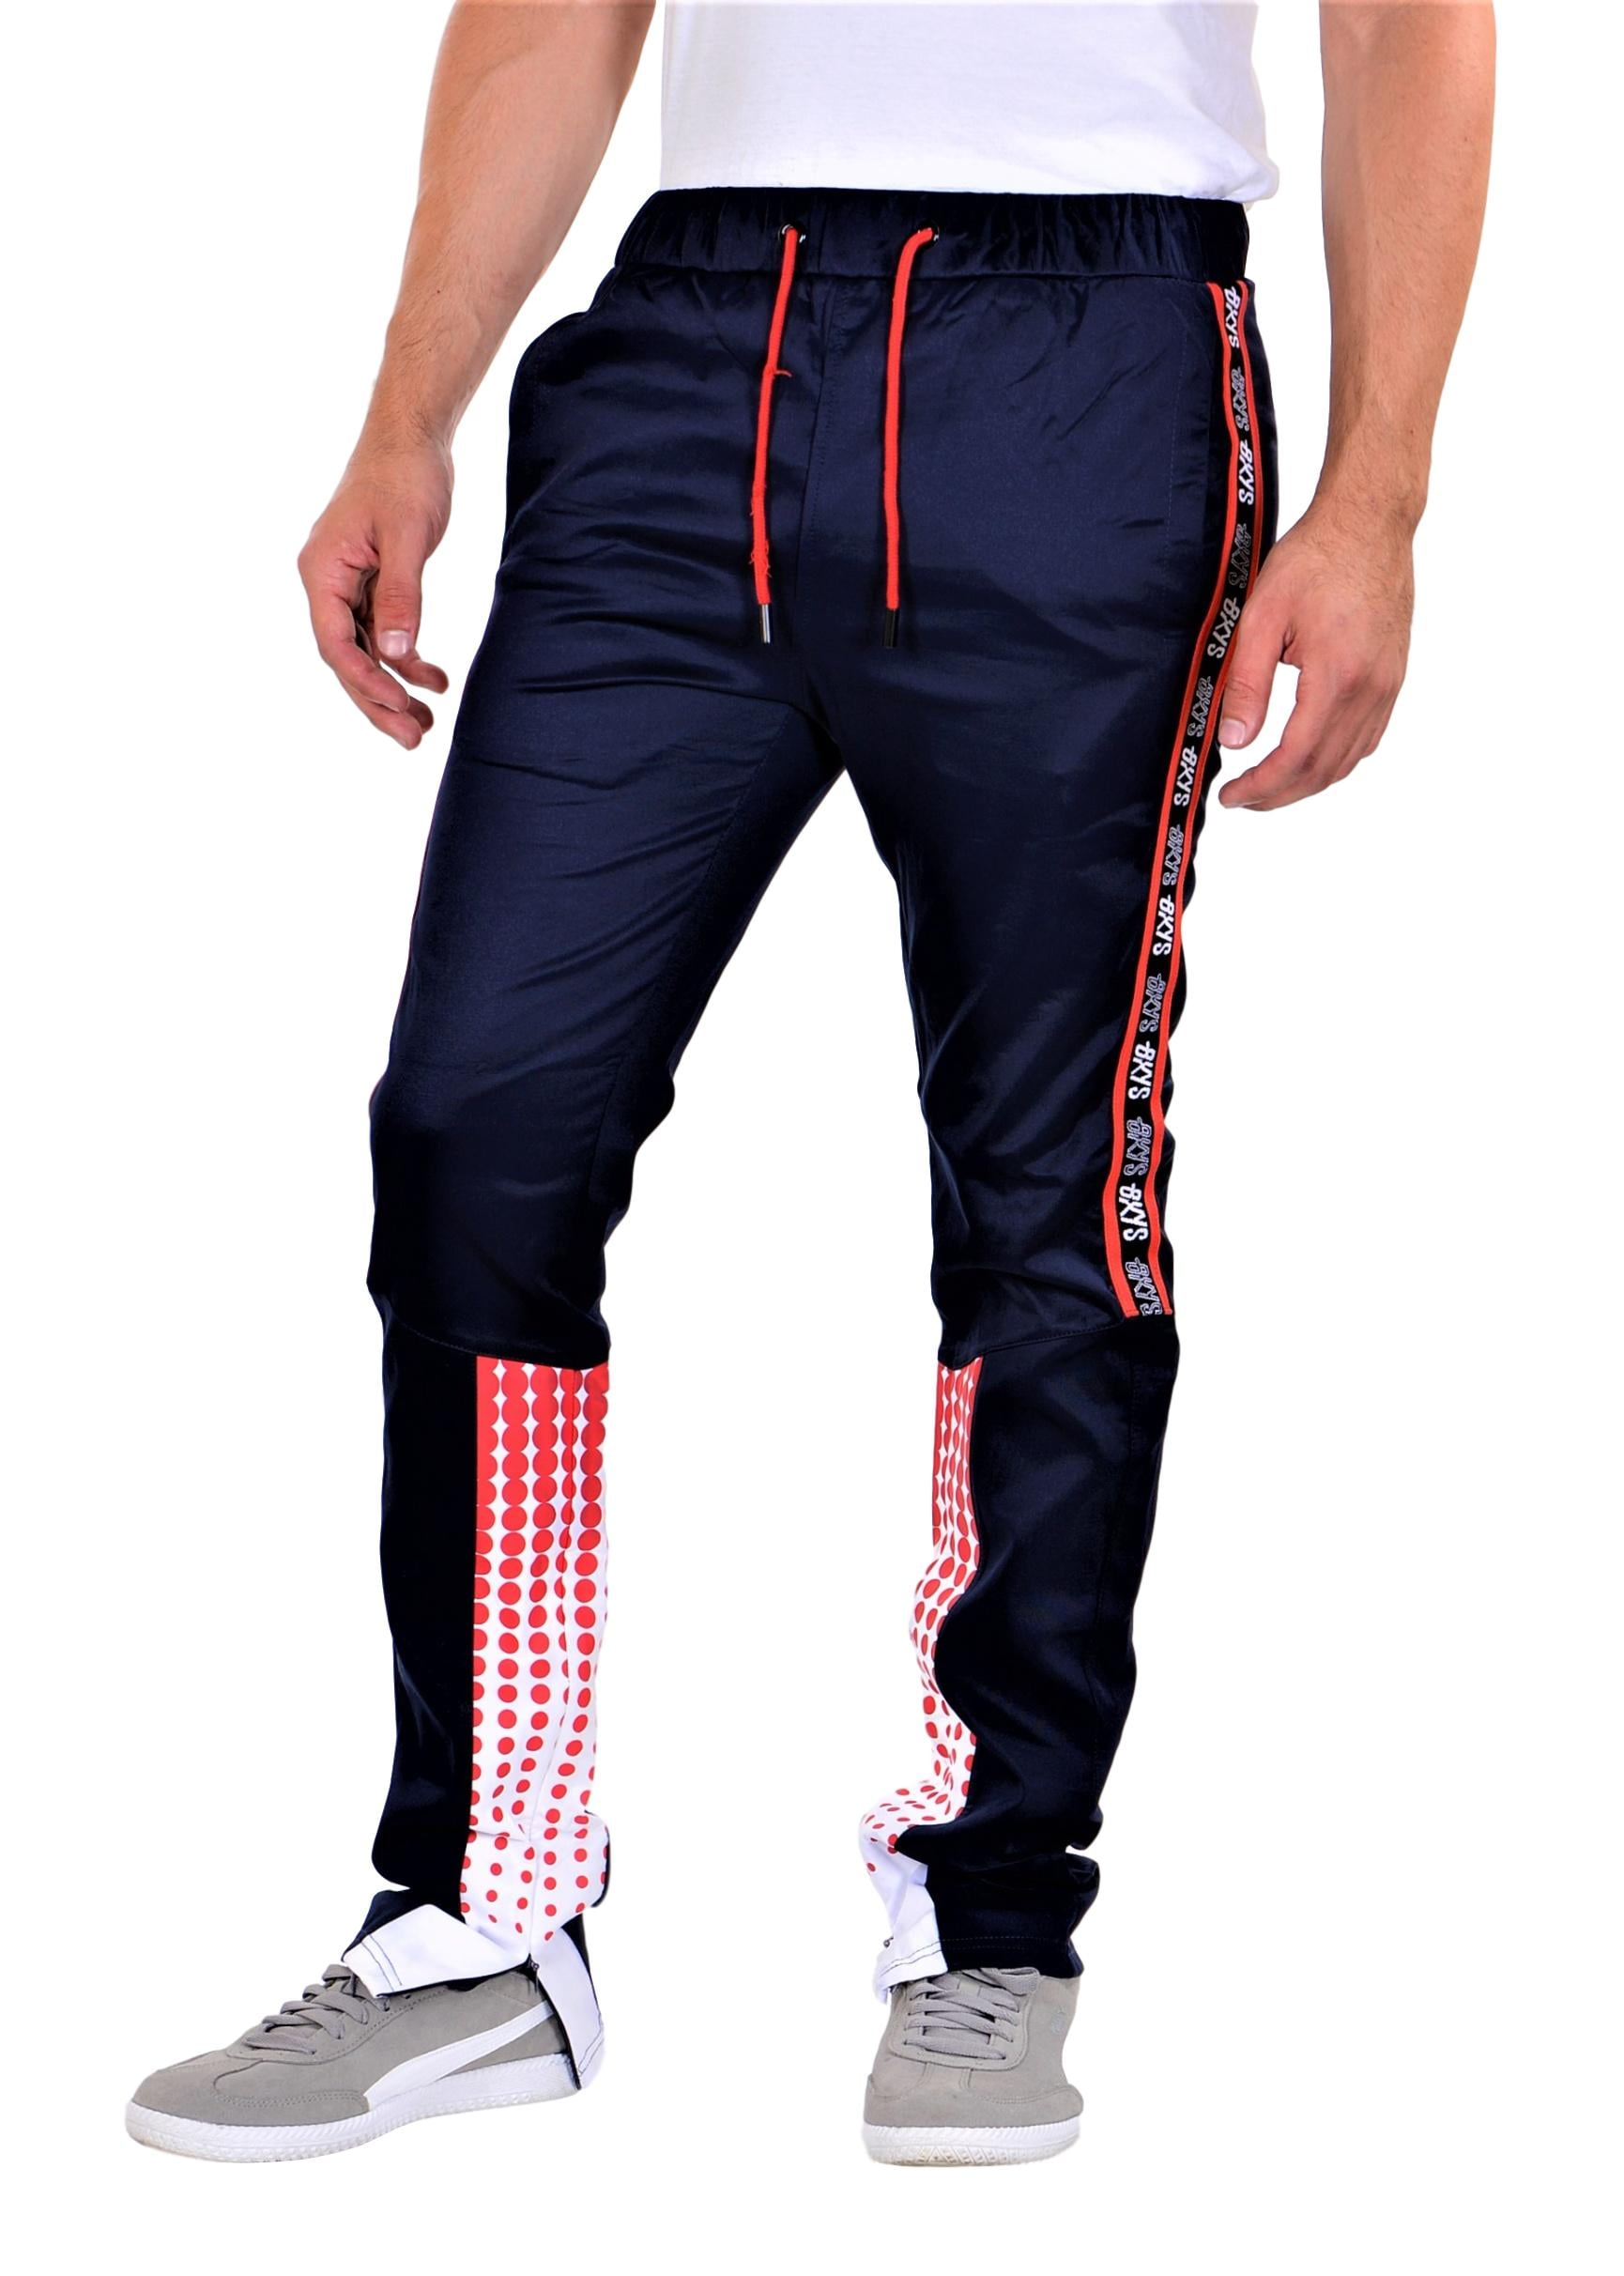 BKYS Men's Futura Windbreaker Pants 2XL Navy - Walmart.com